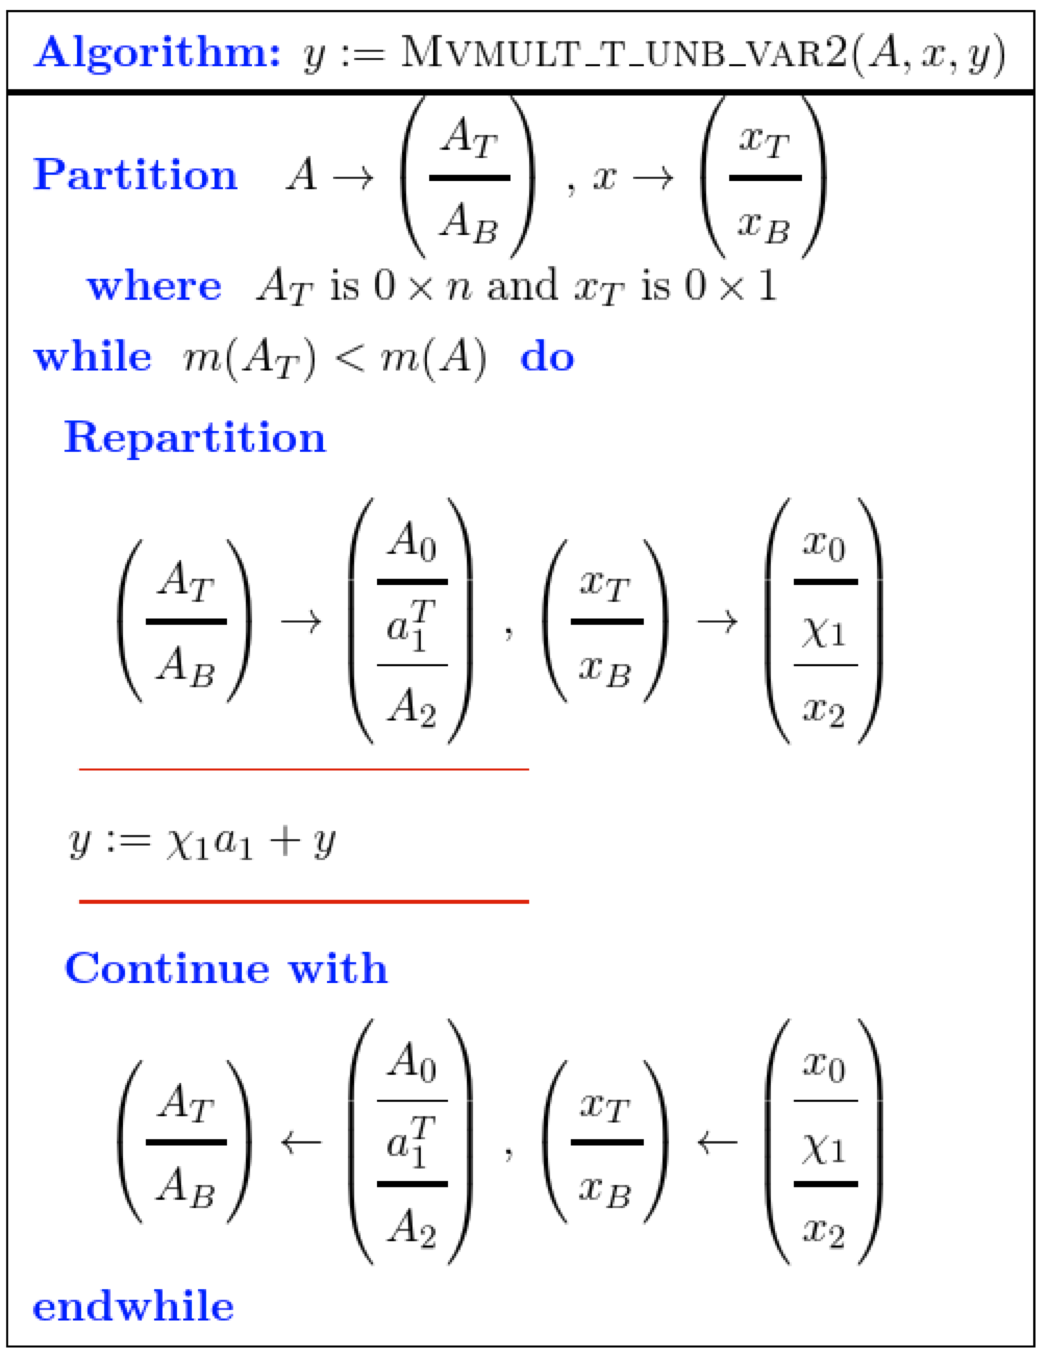 Matrix-vector multiplication via dot axpys algorithm